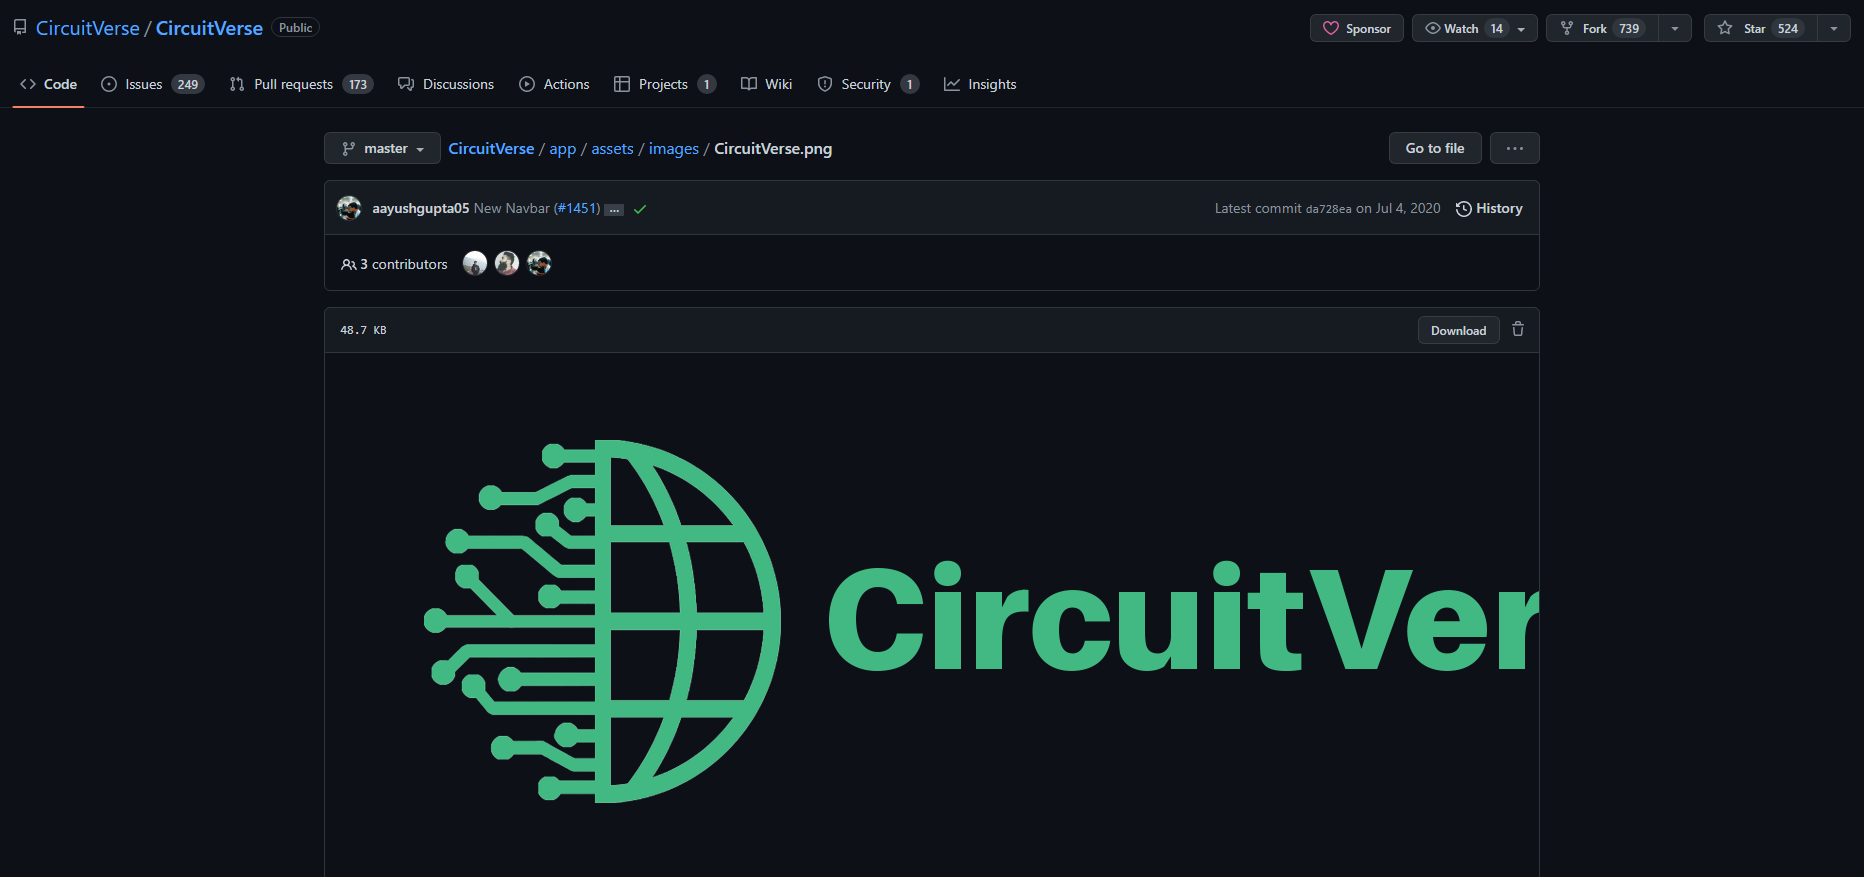 Github page of CircuitVerse logo